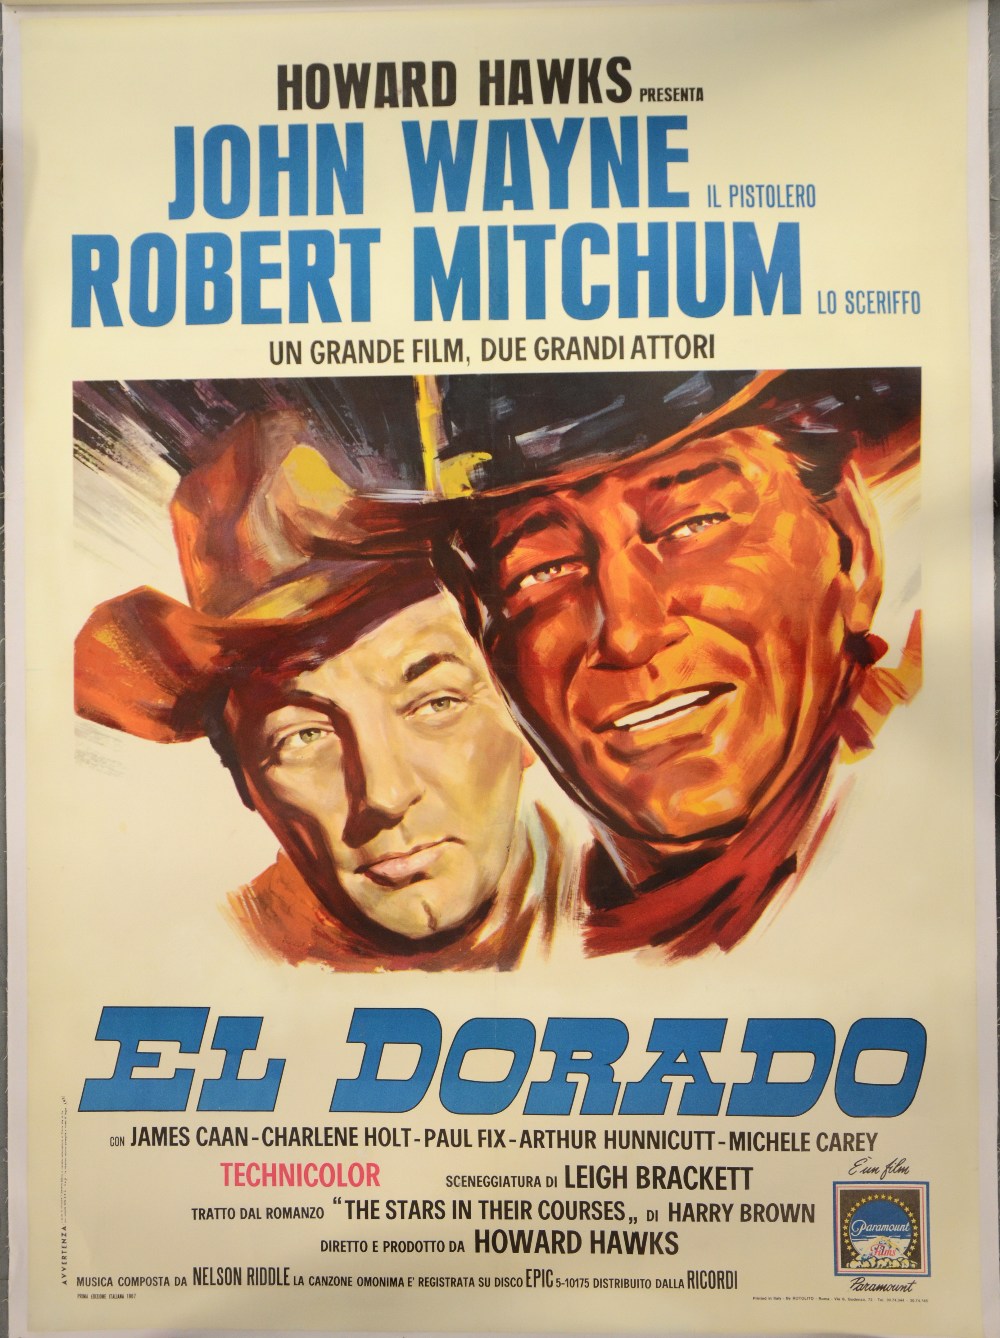 El Dorado (1967) Italian 2 Foglio film poster, western starring John Wayne, Robert Mitchum, - Image 2 of 4